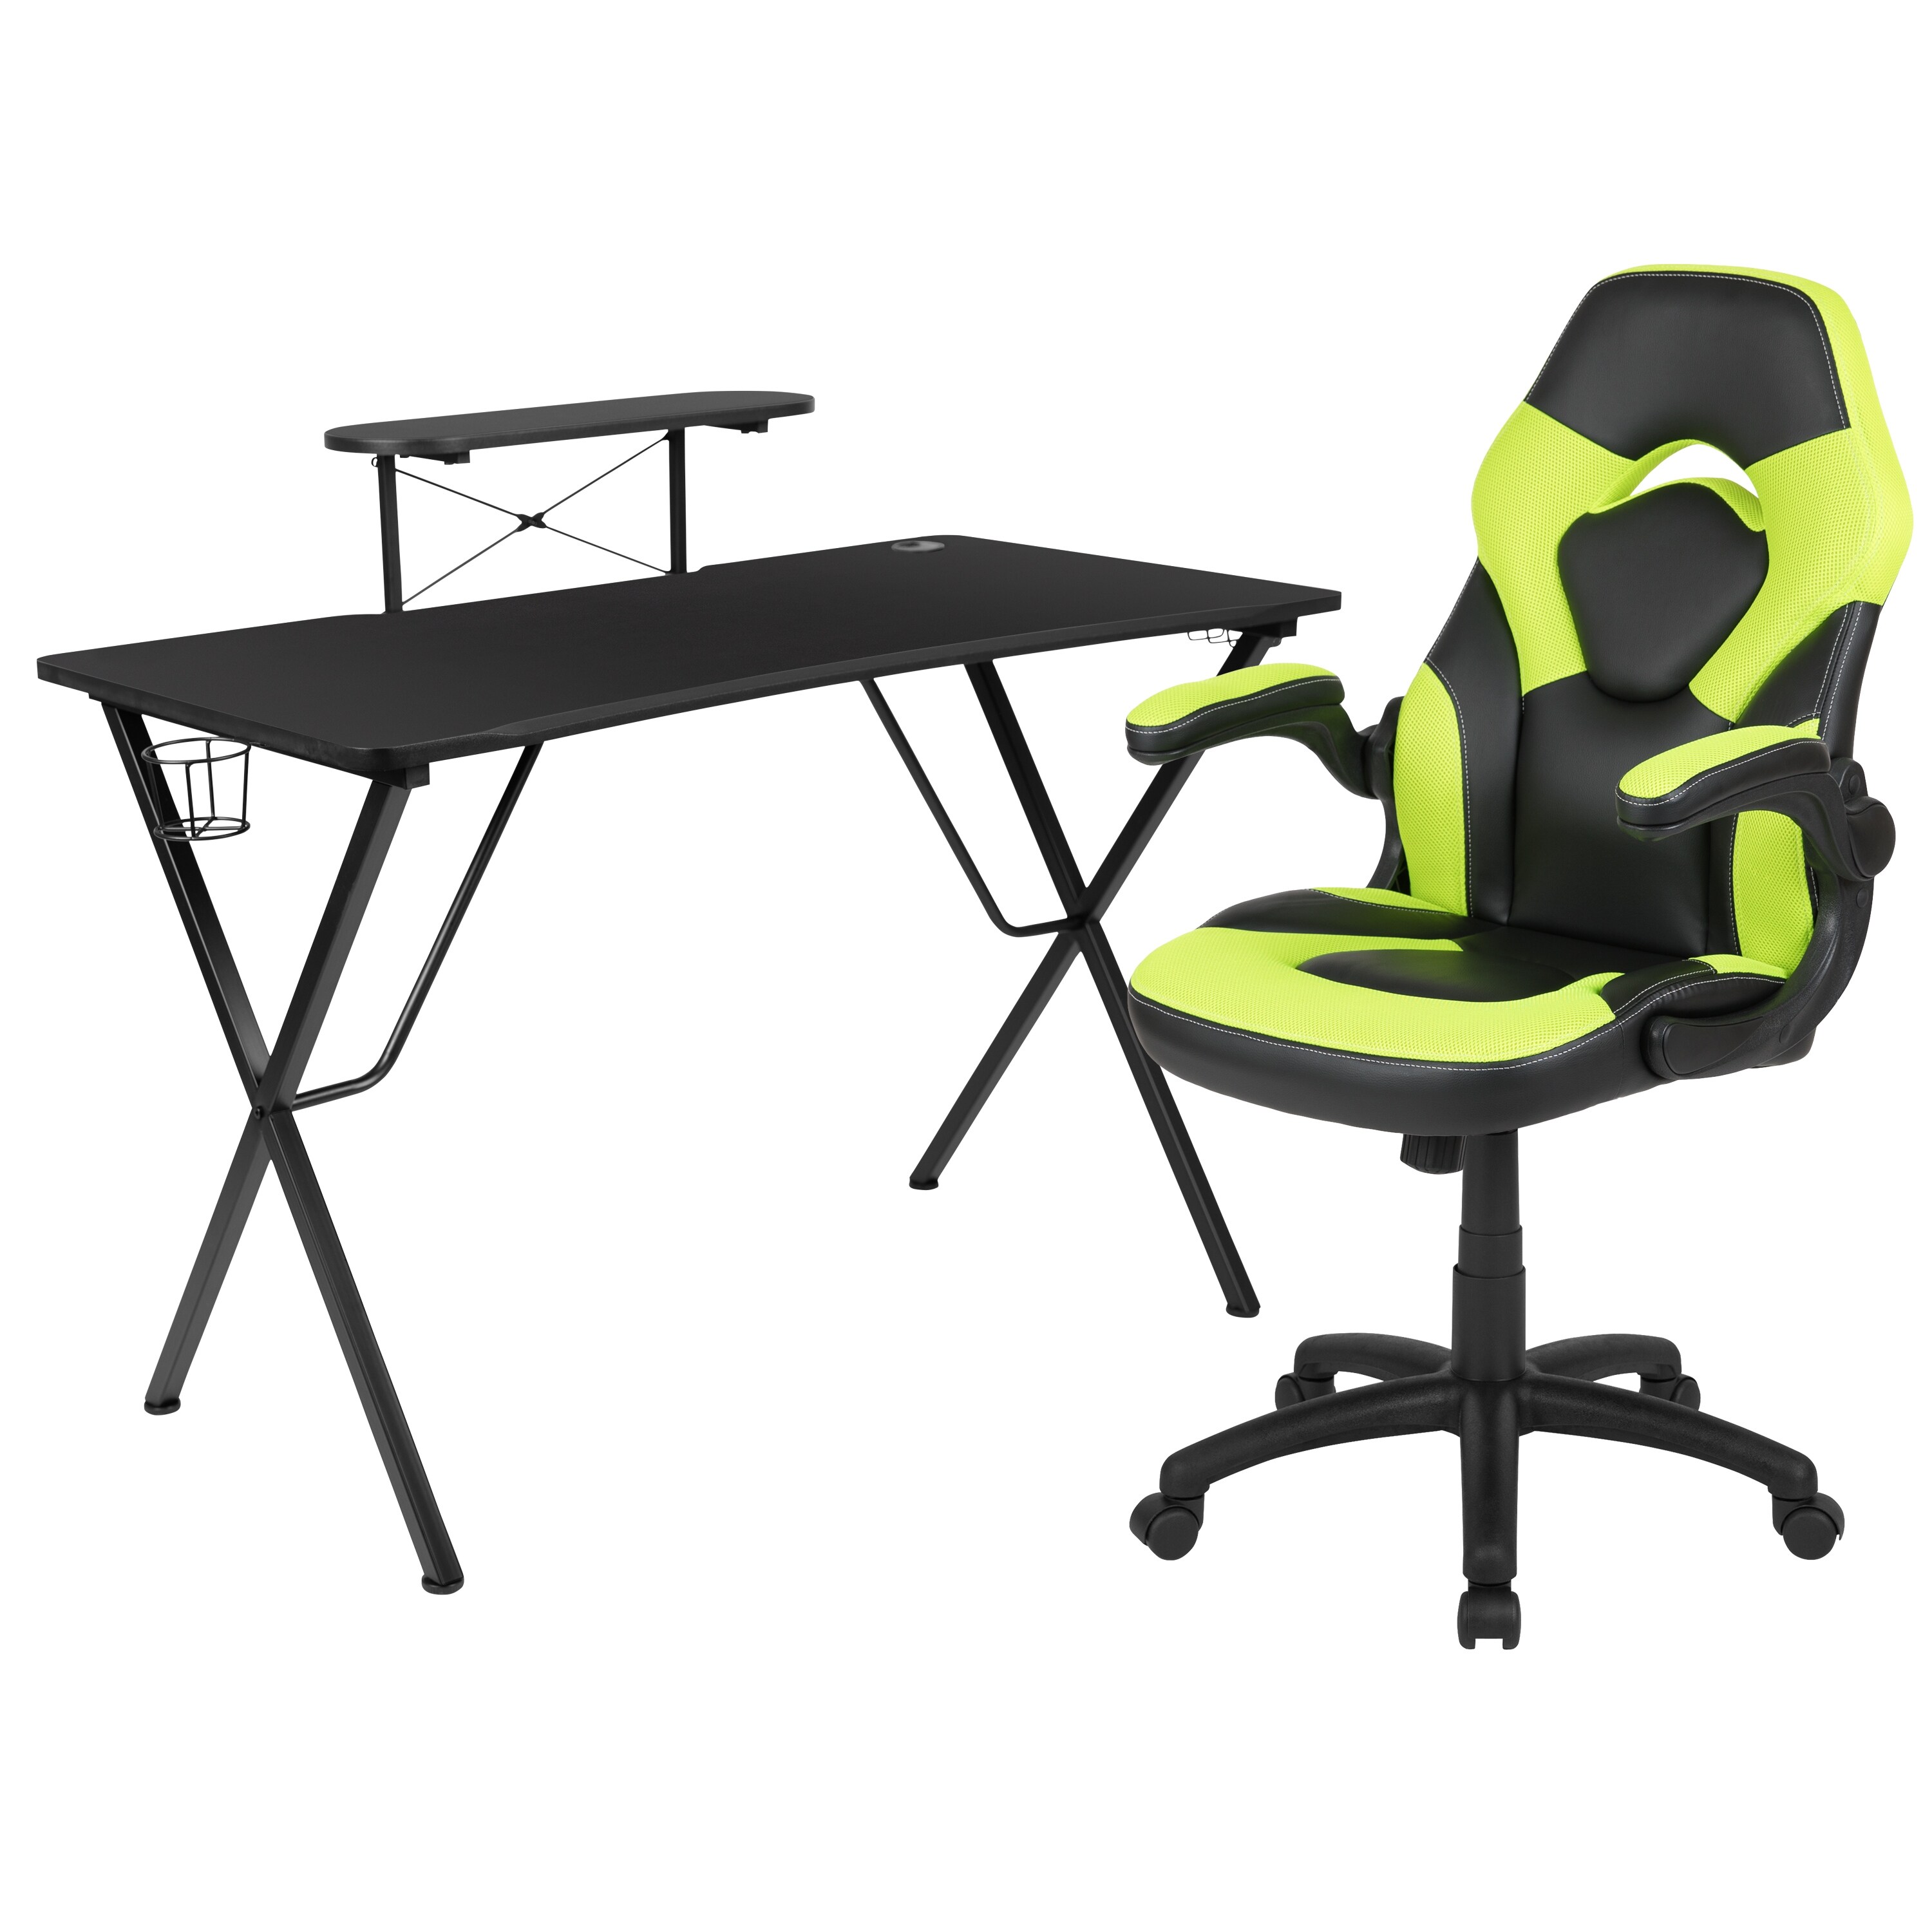 Gaming Chair plus Gaming Desk BUNDLE